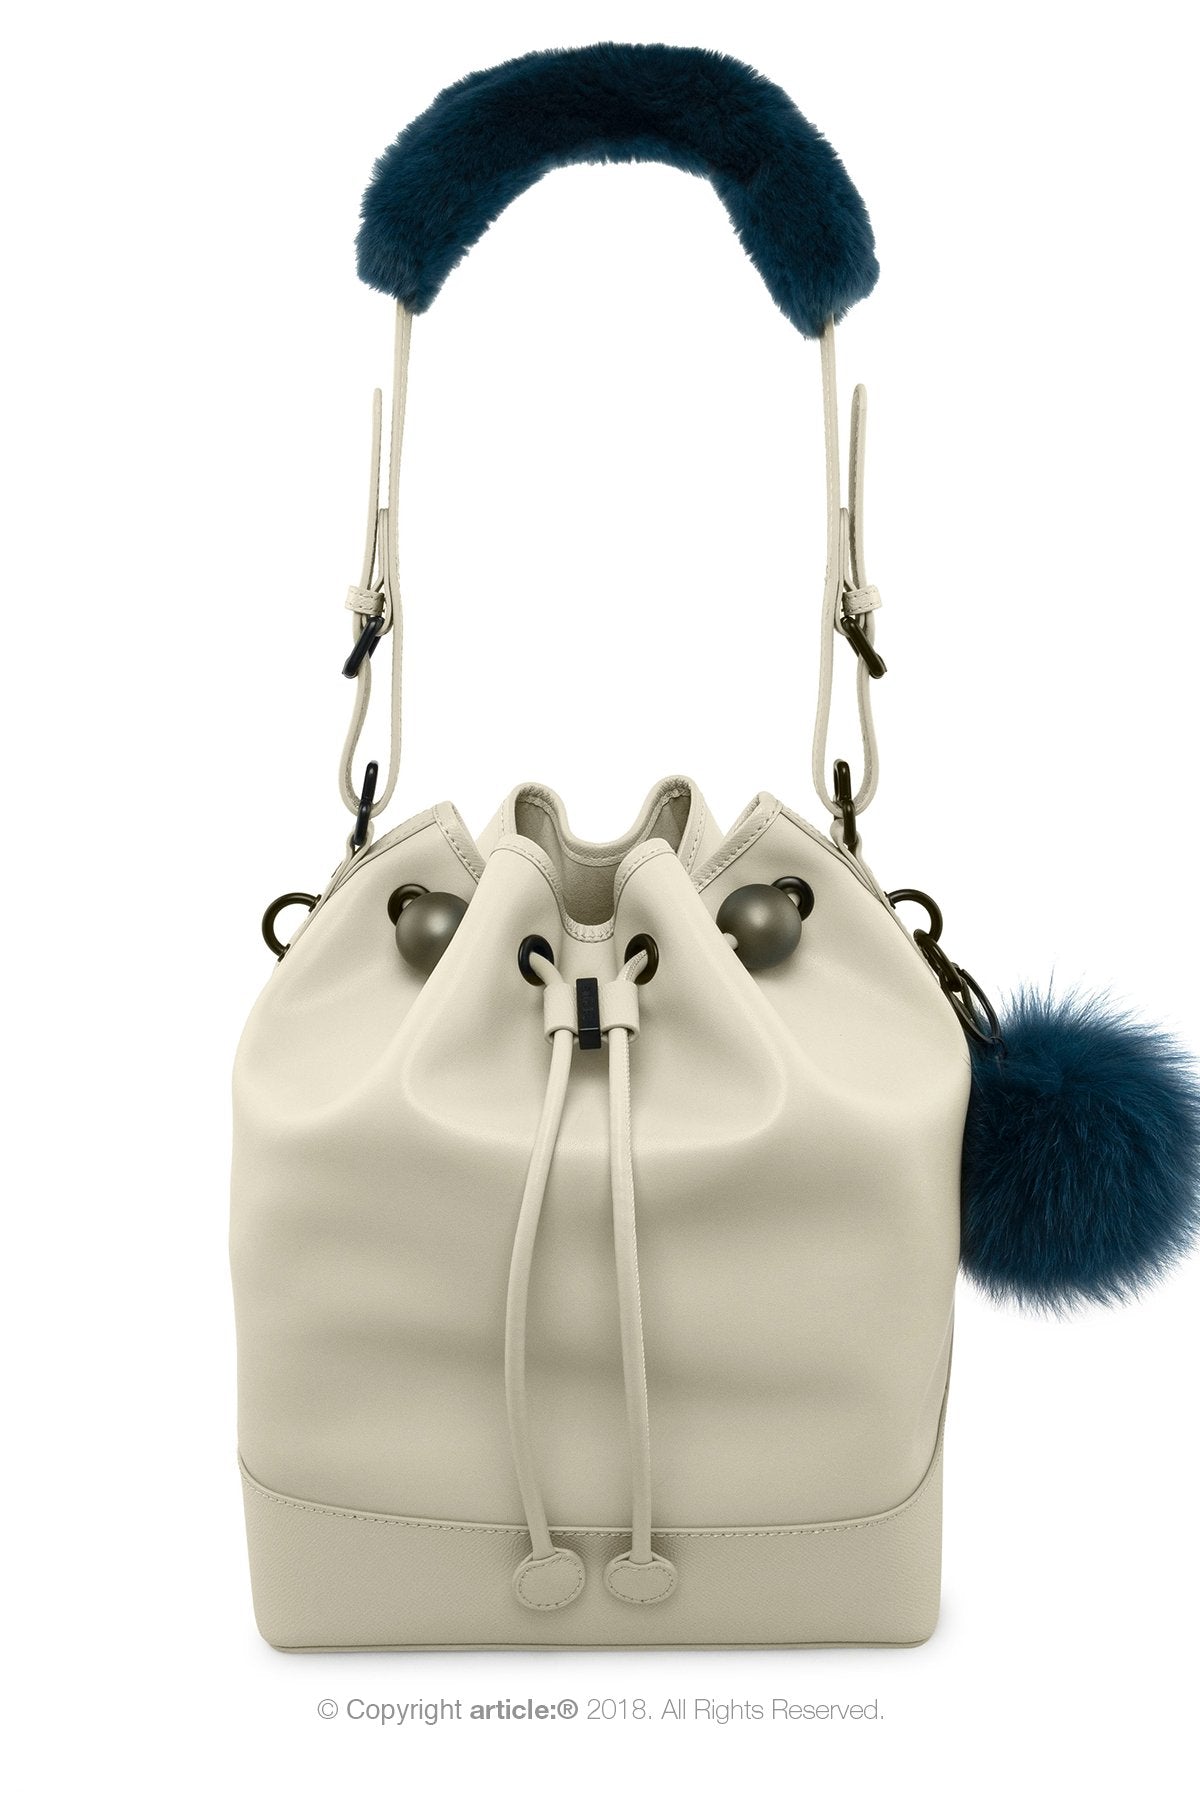 article: #120 Handbag Grande Bucket - Oyster